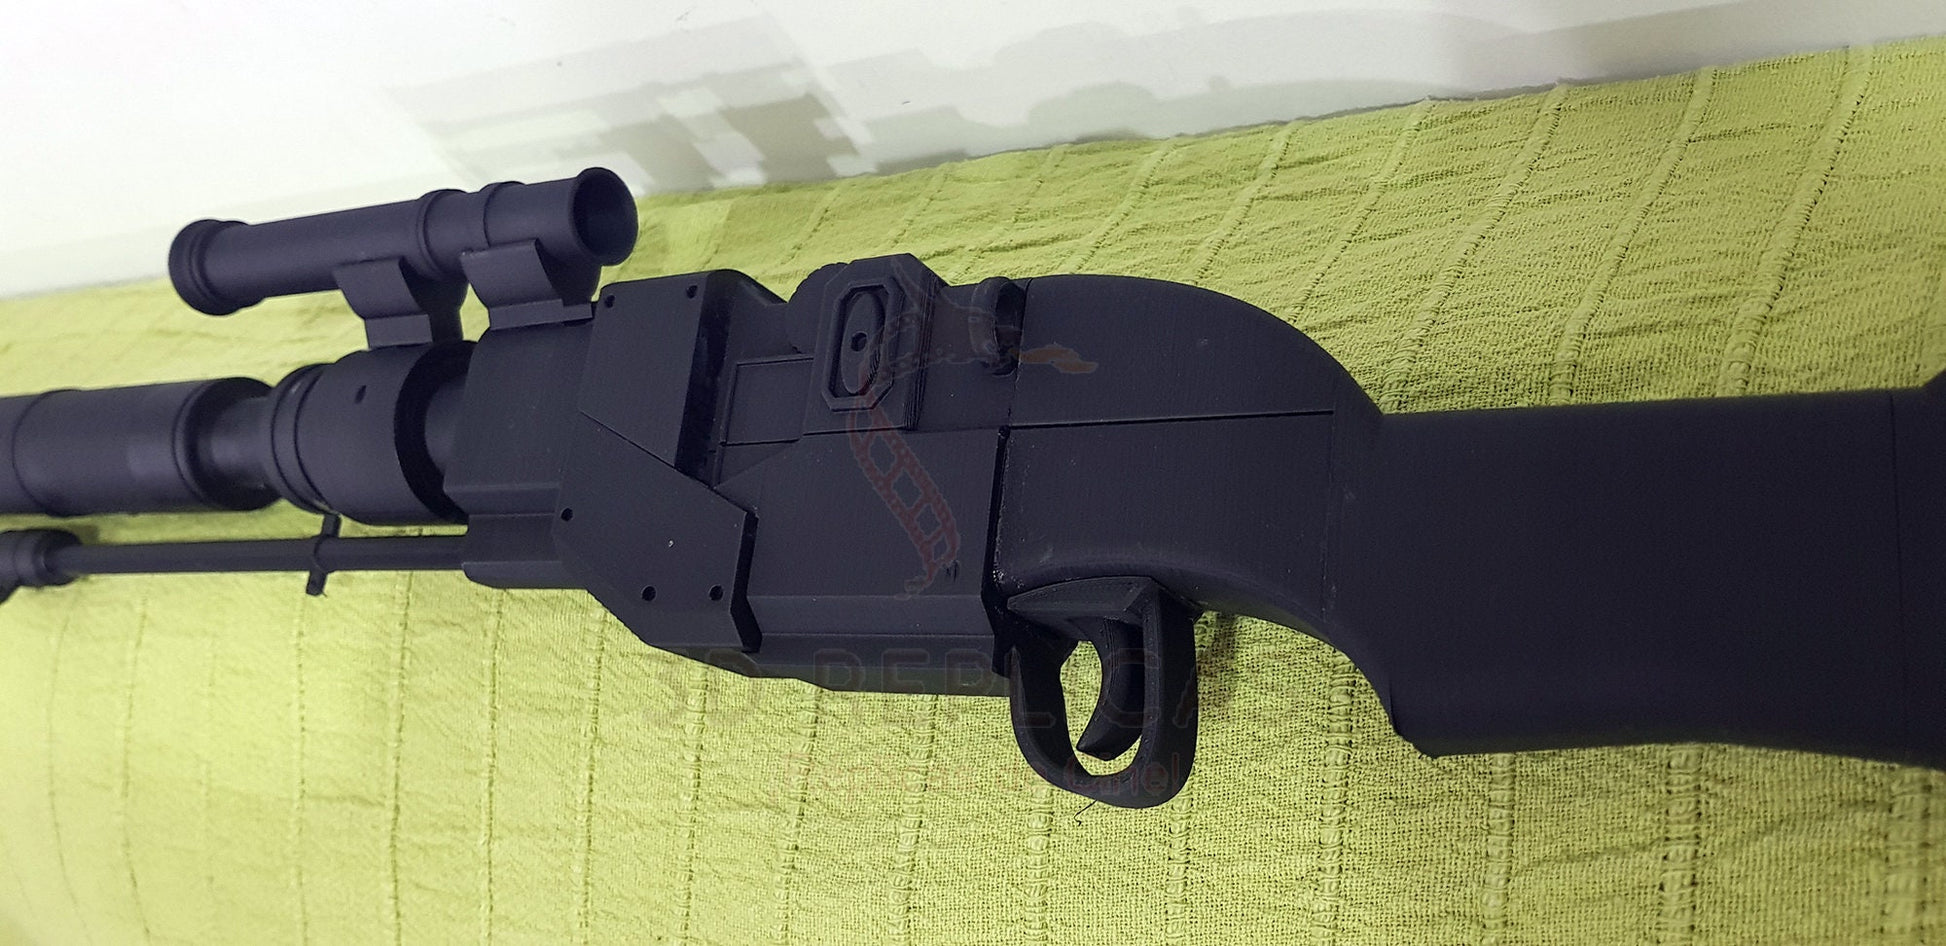 Star Wars The Mandalorian 2019 Amban Phase-Pulse Blaster Sniper Rifle Cosplay Prop Replica Gun Pedro Pascal